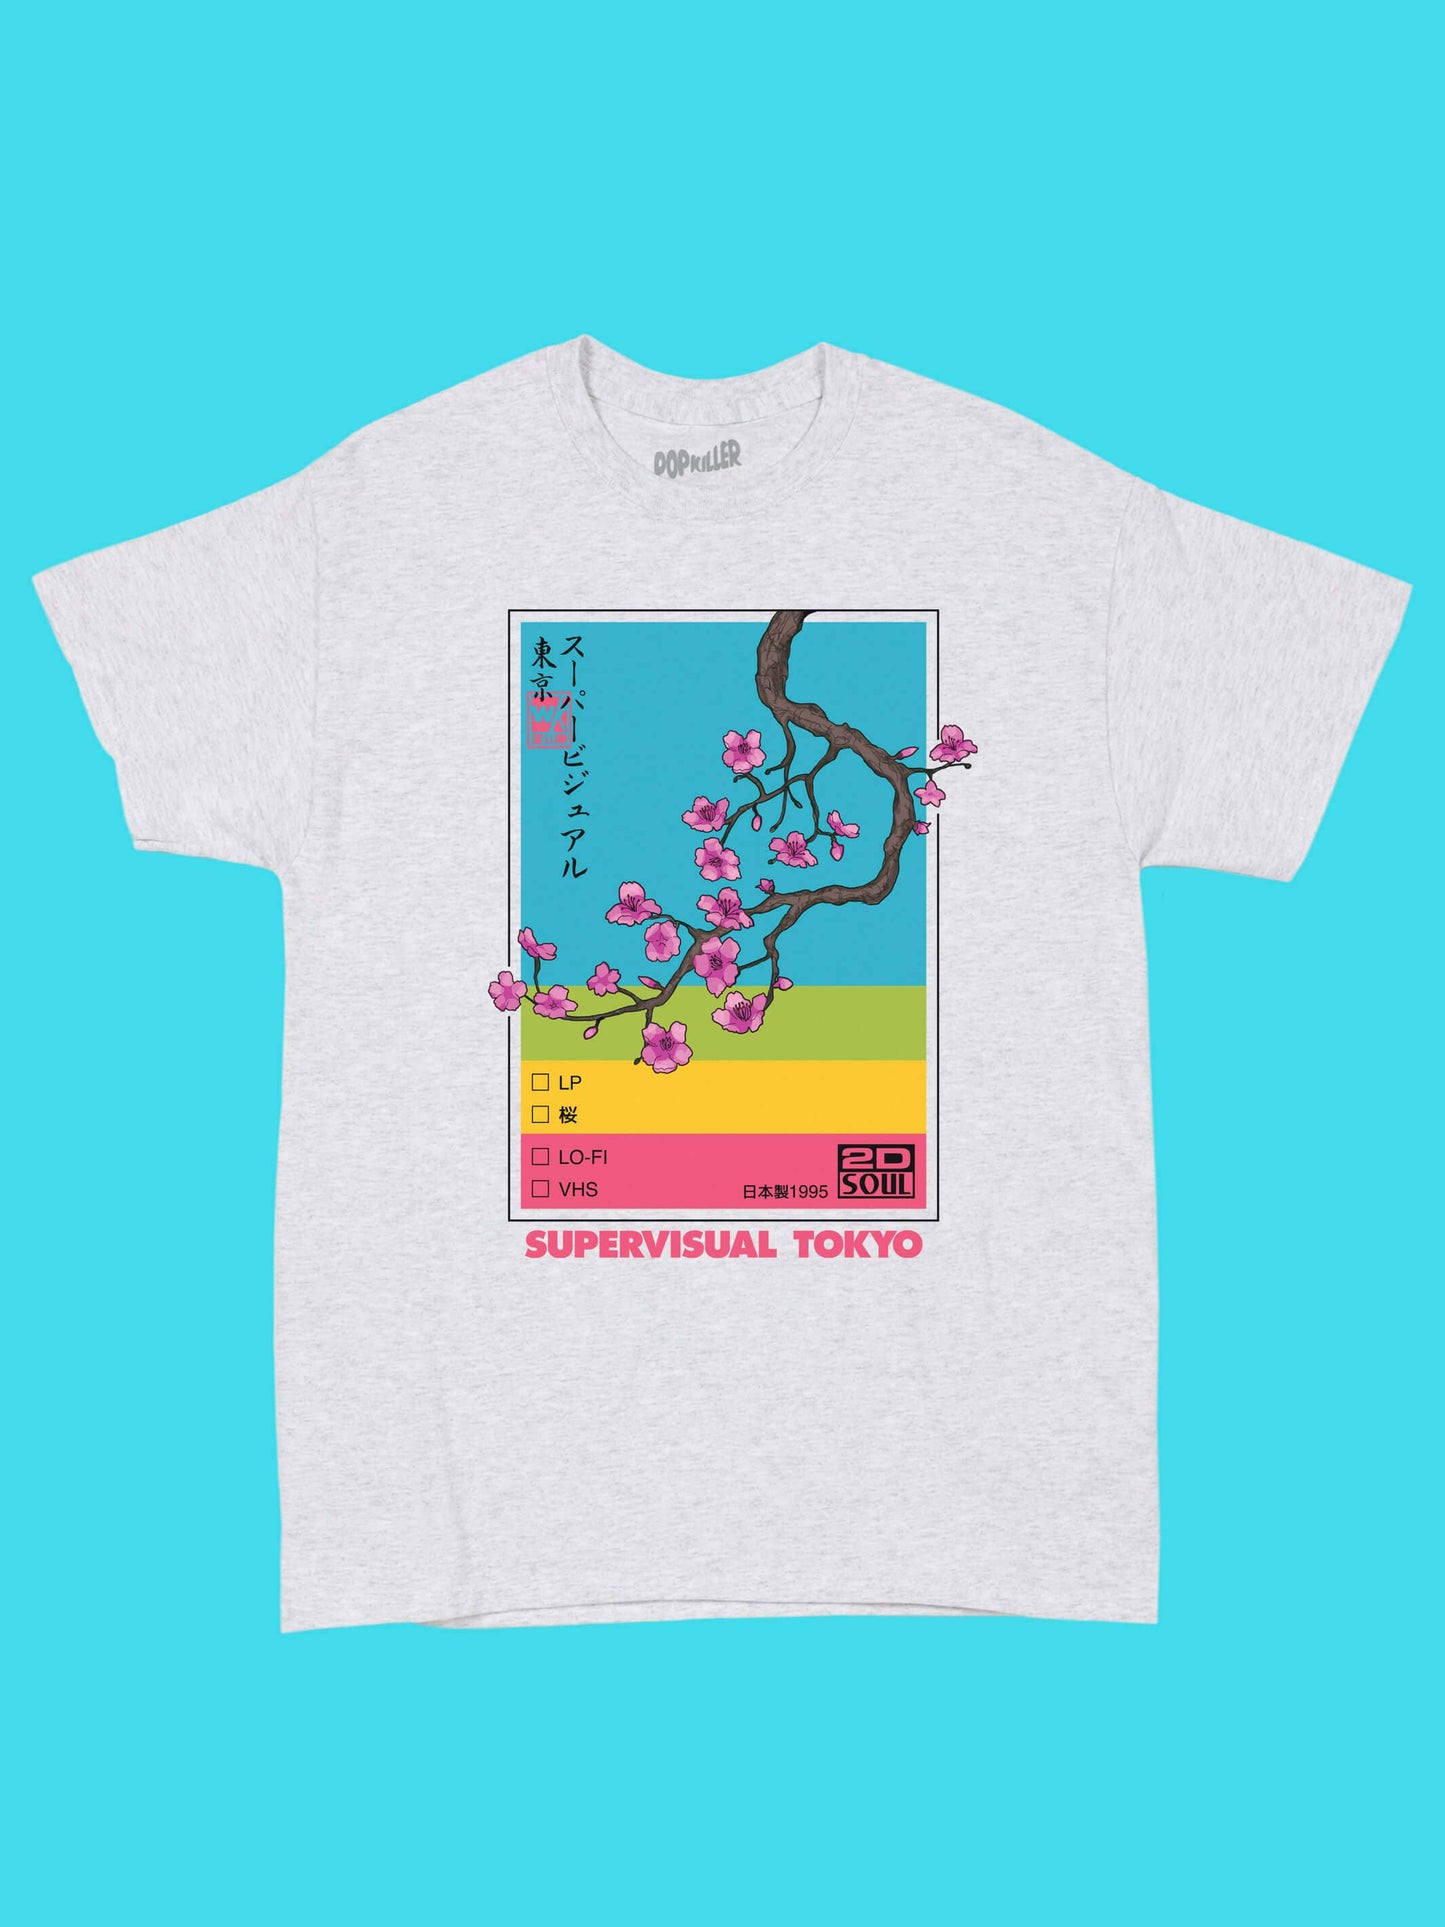 Supervisual Tokyo Artist Series Warakami Vaporwave  T-shirt